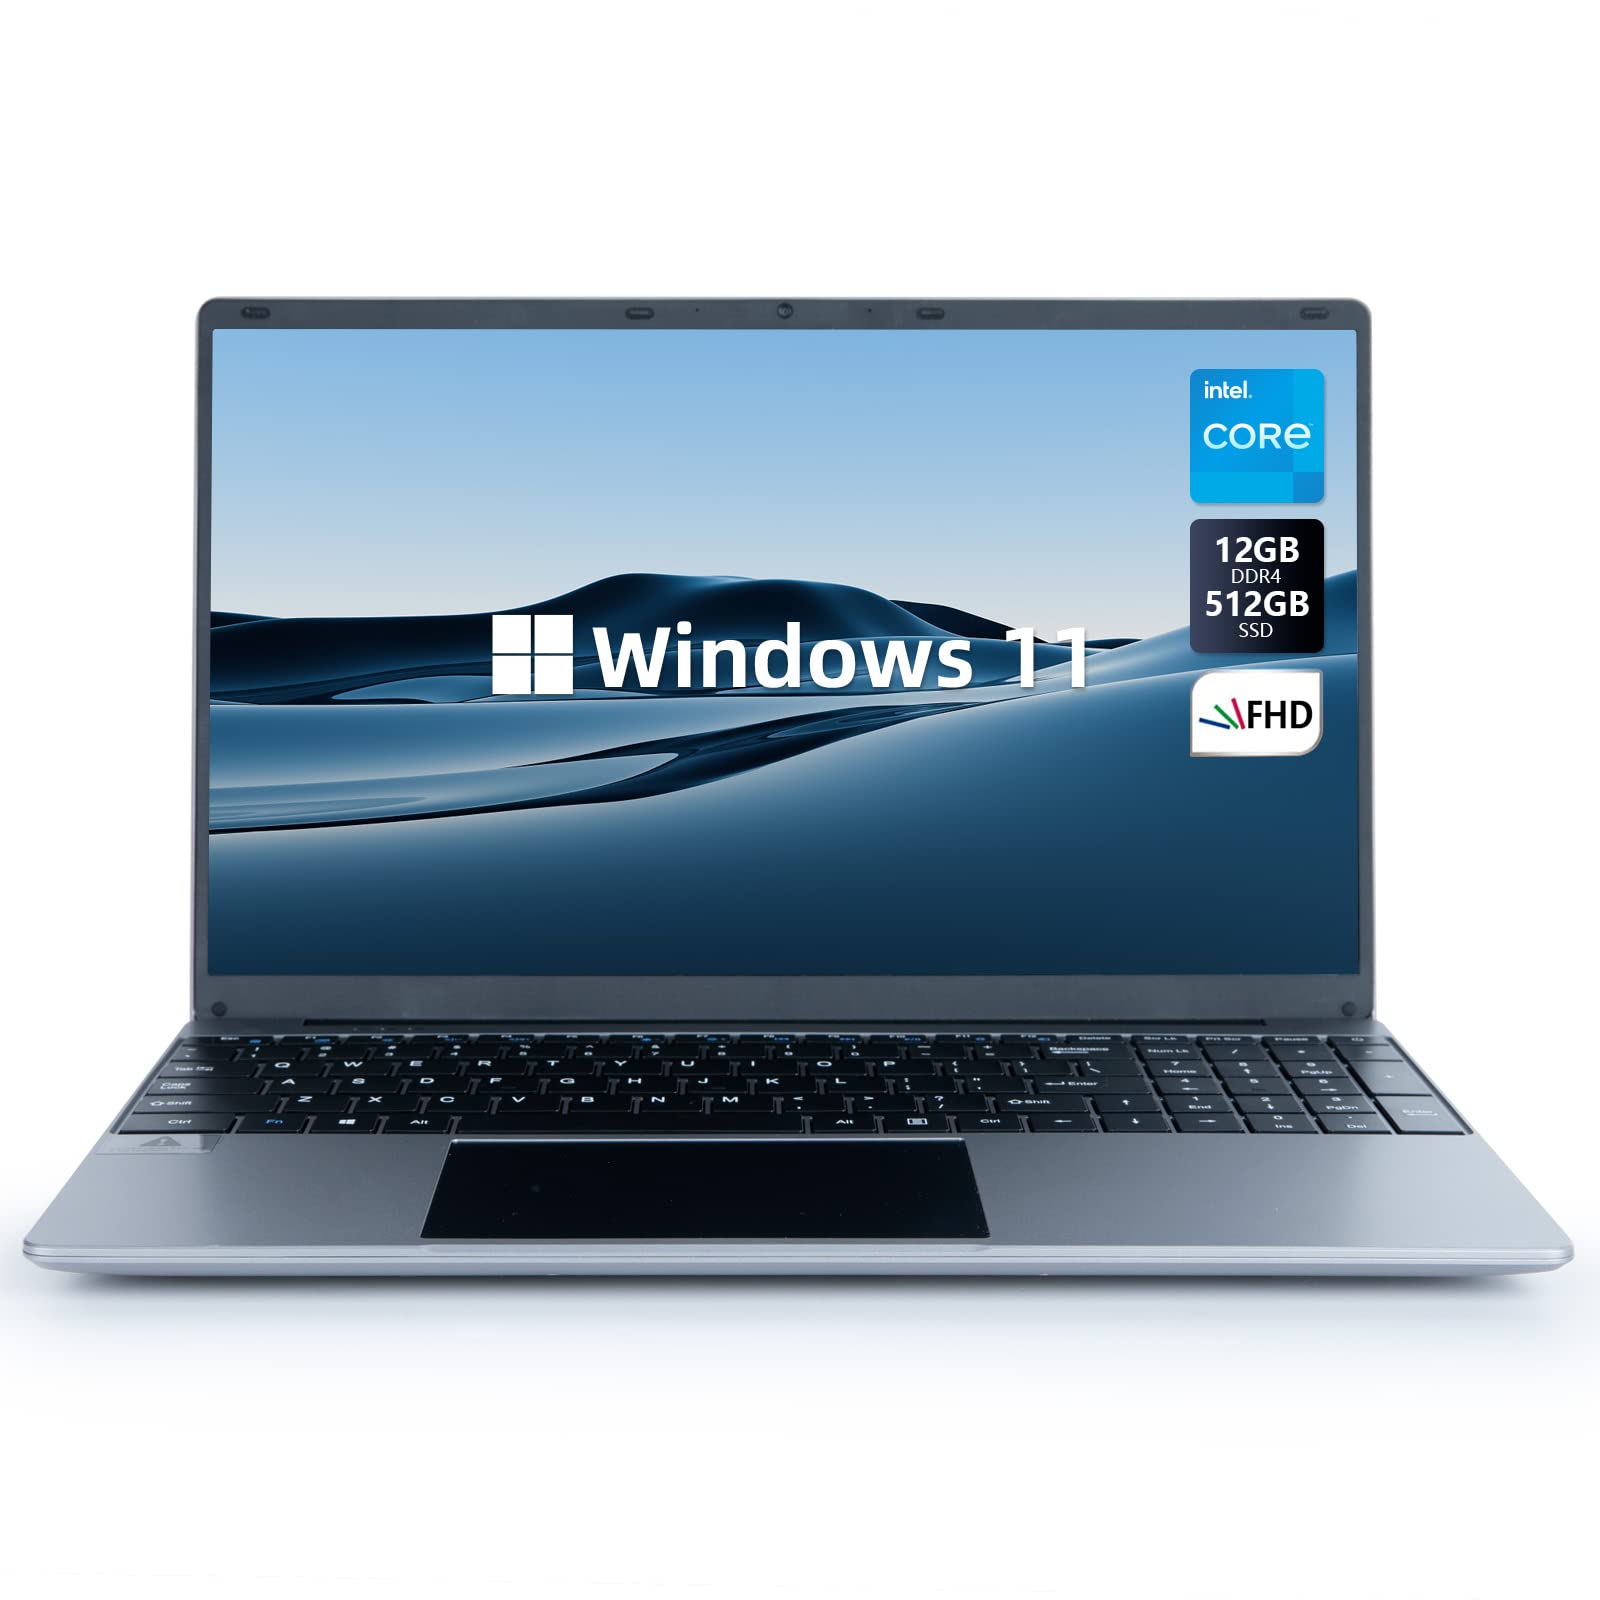 Maypug Laptop Computer -1080P IPS Full HD Laptop,12GB DDR4 512GB SSD Quad-Core Intel Celeron Processors, Pre-Installed Windows 11, USB 3.0, 15.6”Screen, Bluetooth 4.2, 2.4G/5G WiFi, Mini-HDMI